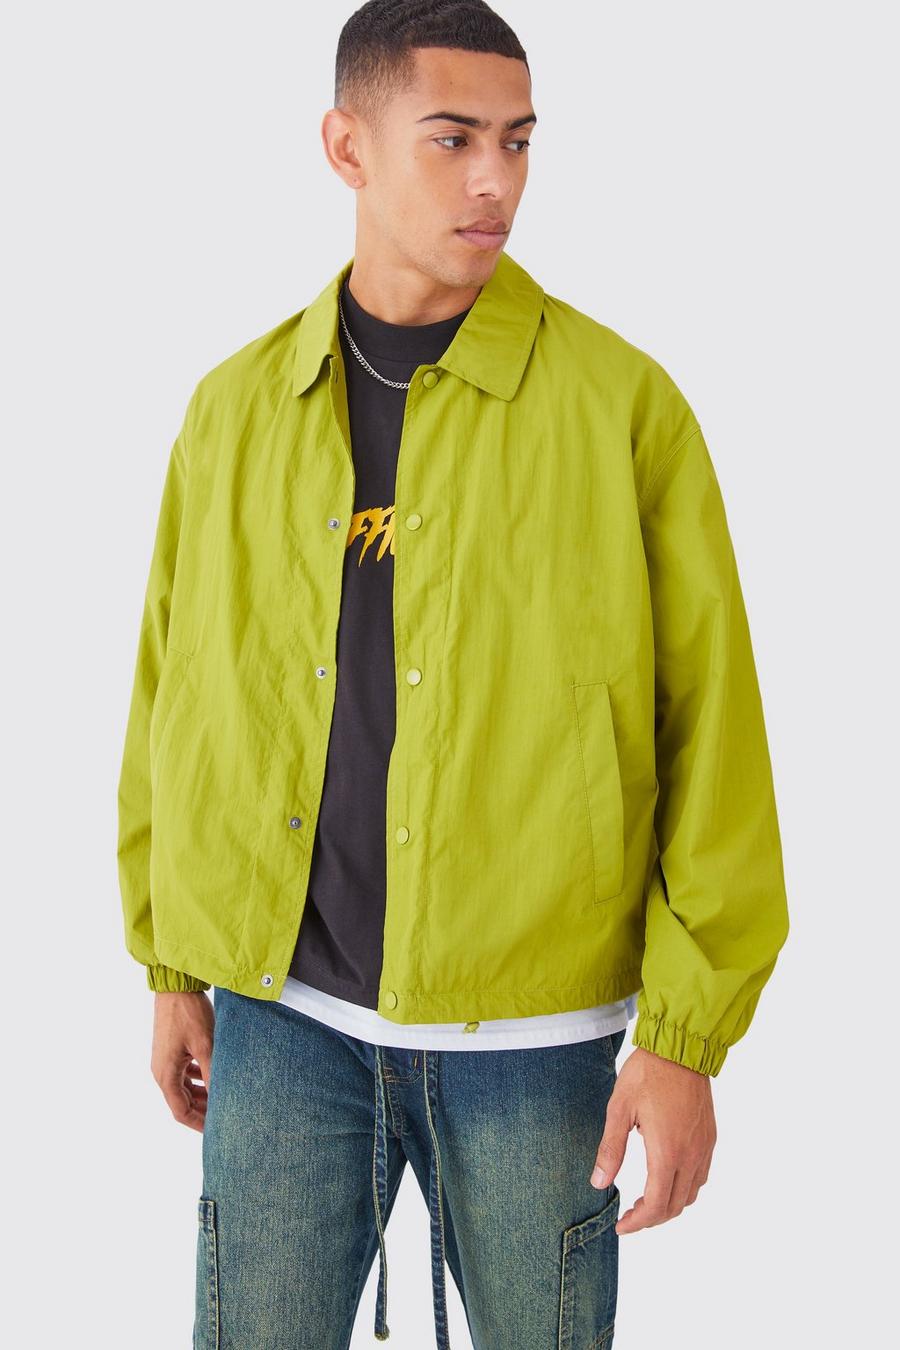 Lime green Crinkle Nylon Coach Jacket